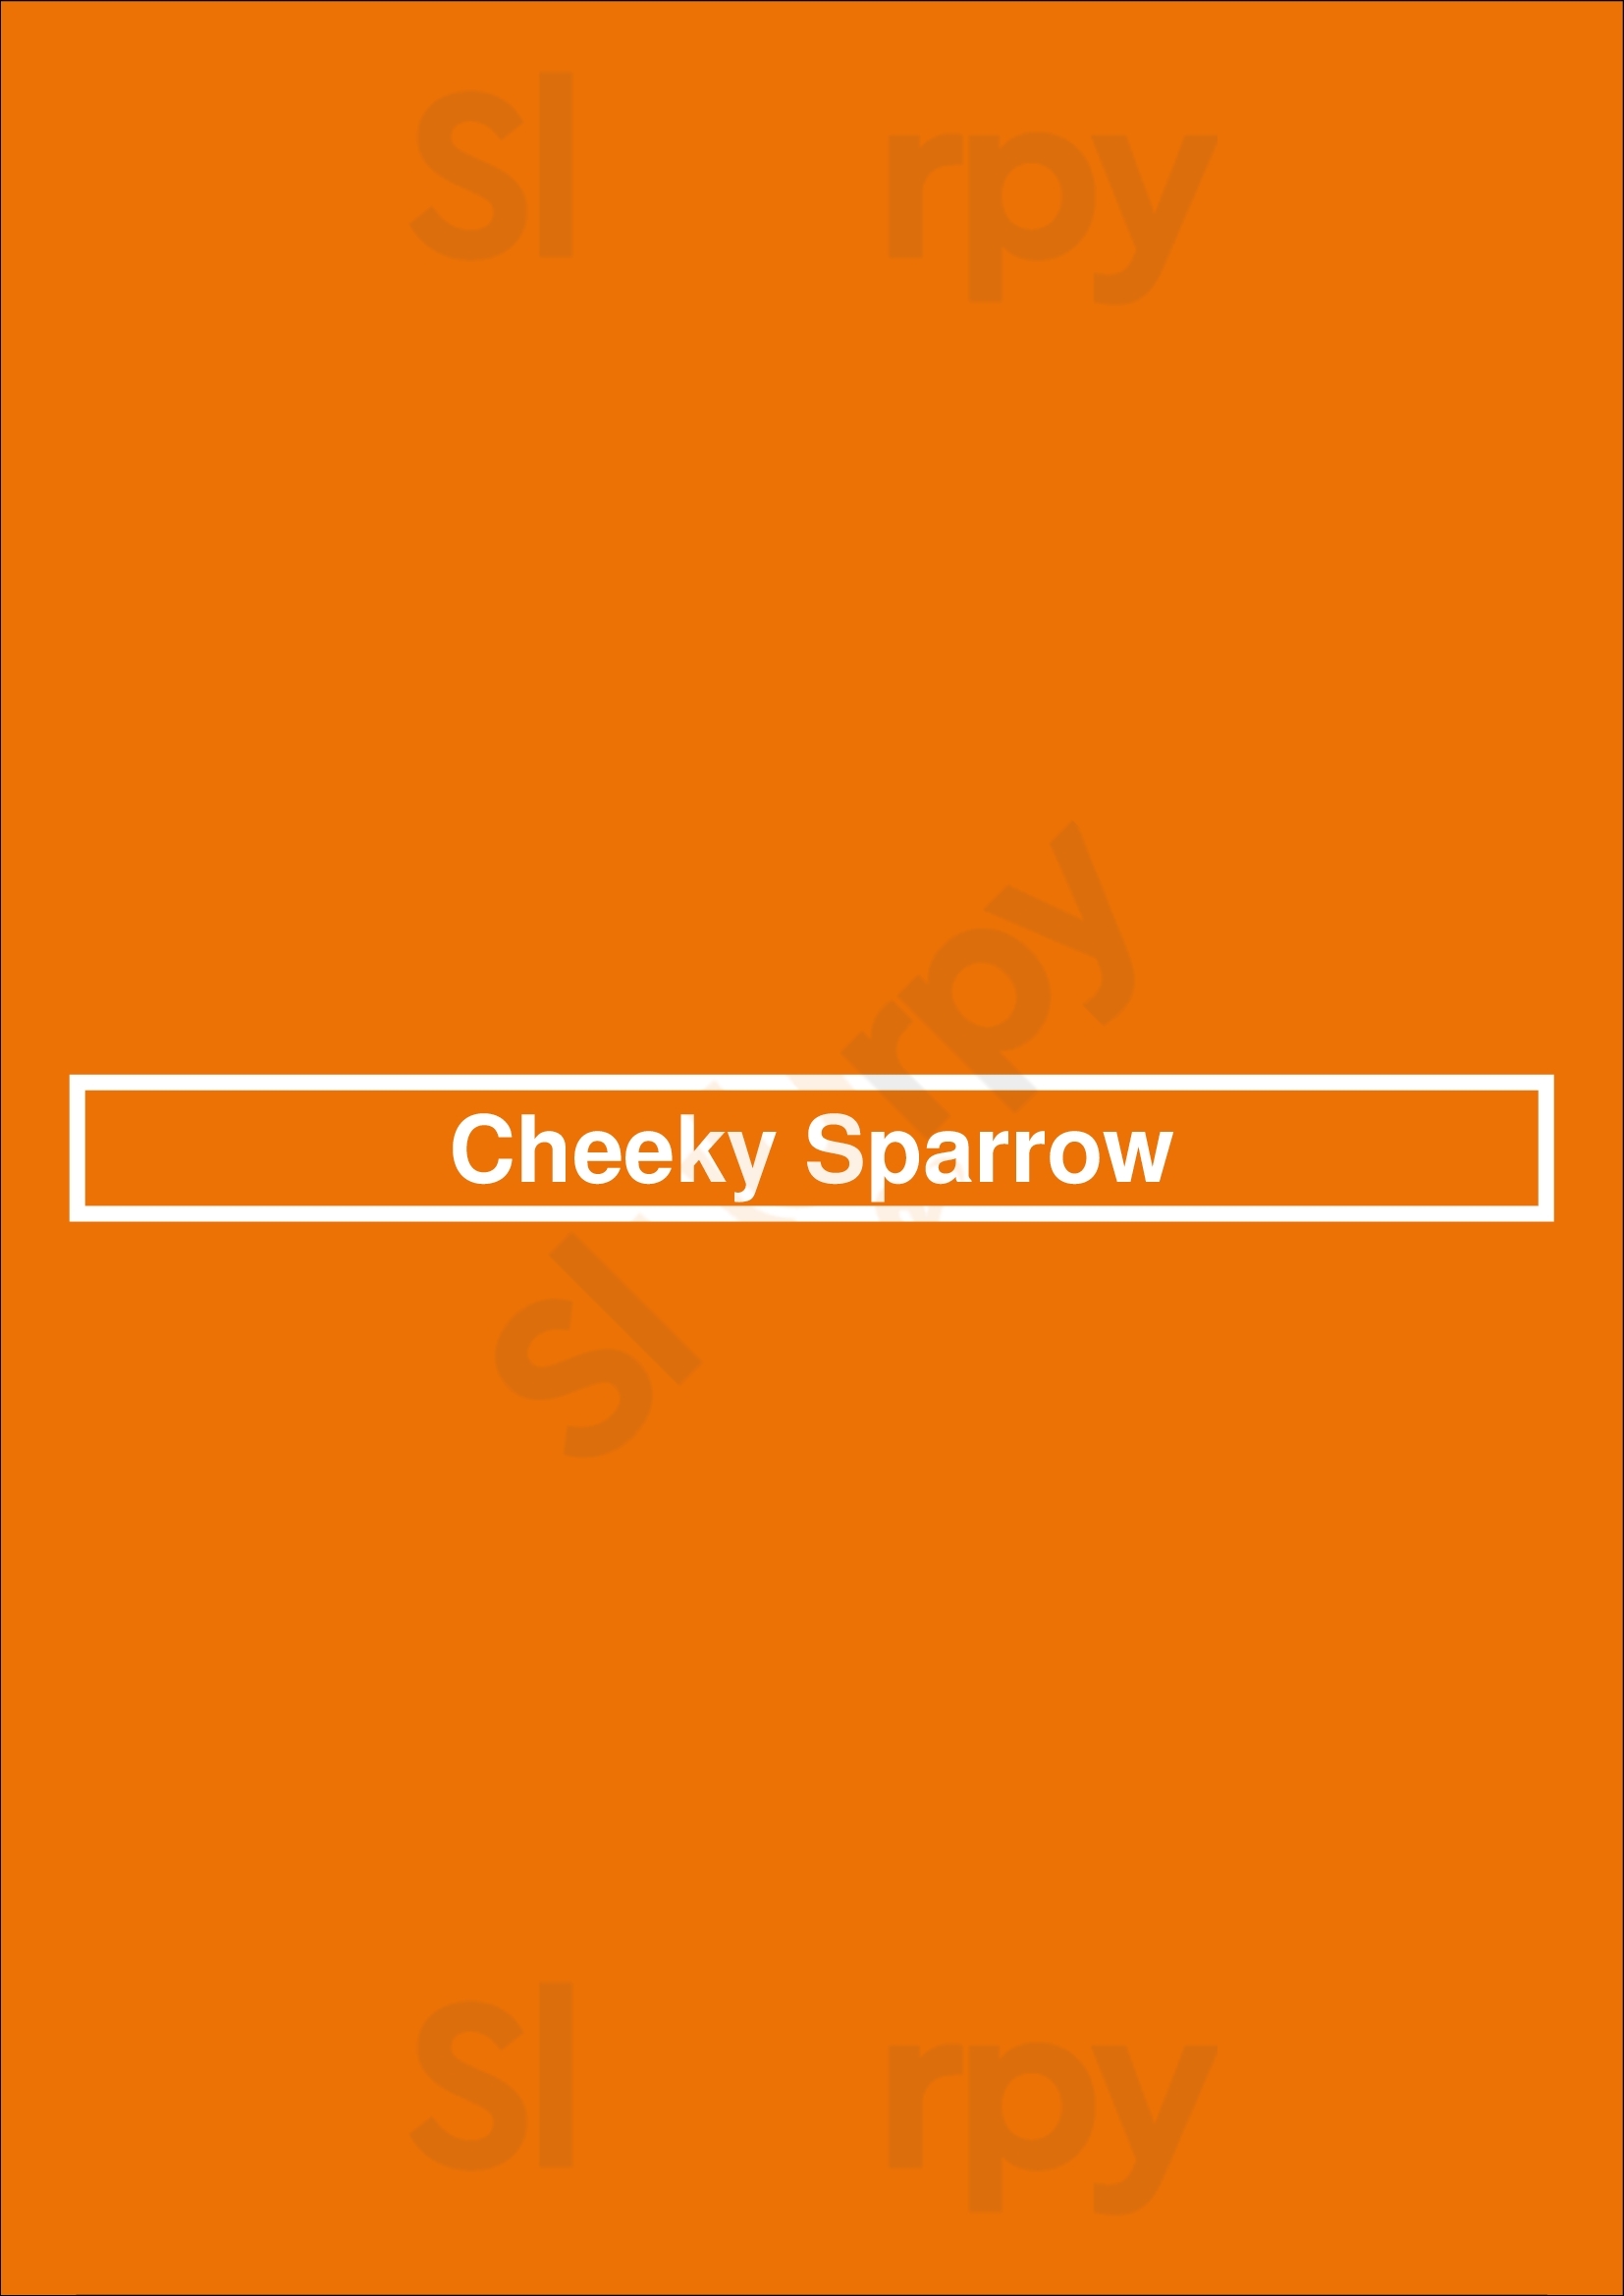 Cheeky Sparrow Perth Menu - 1